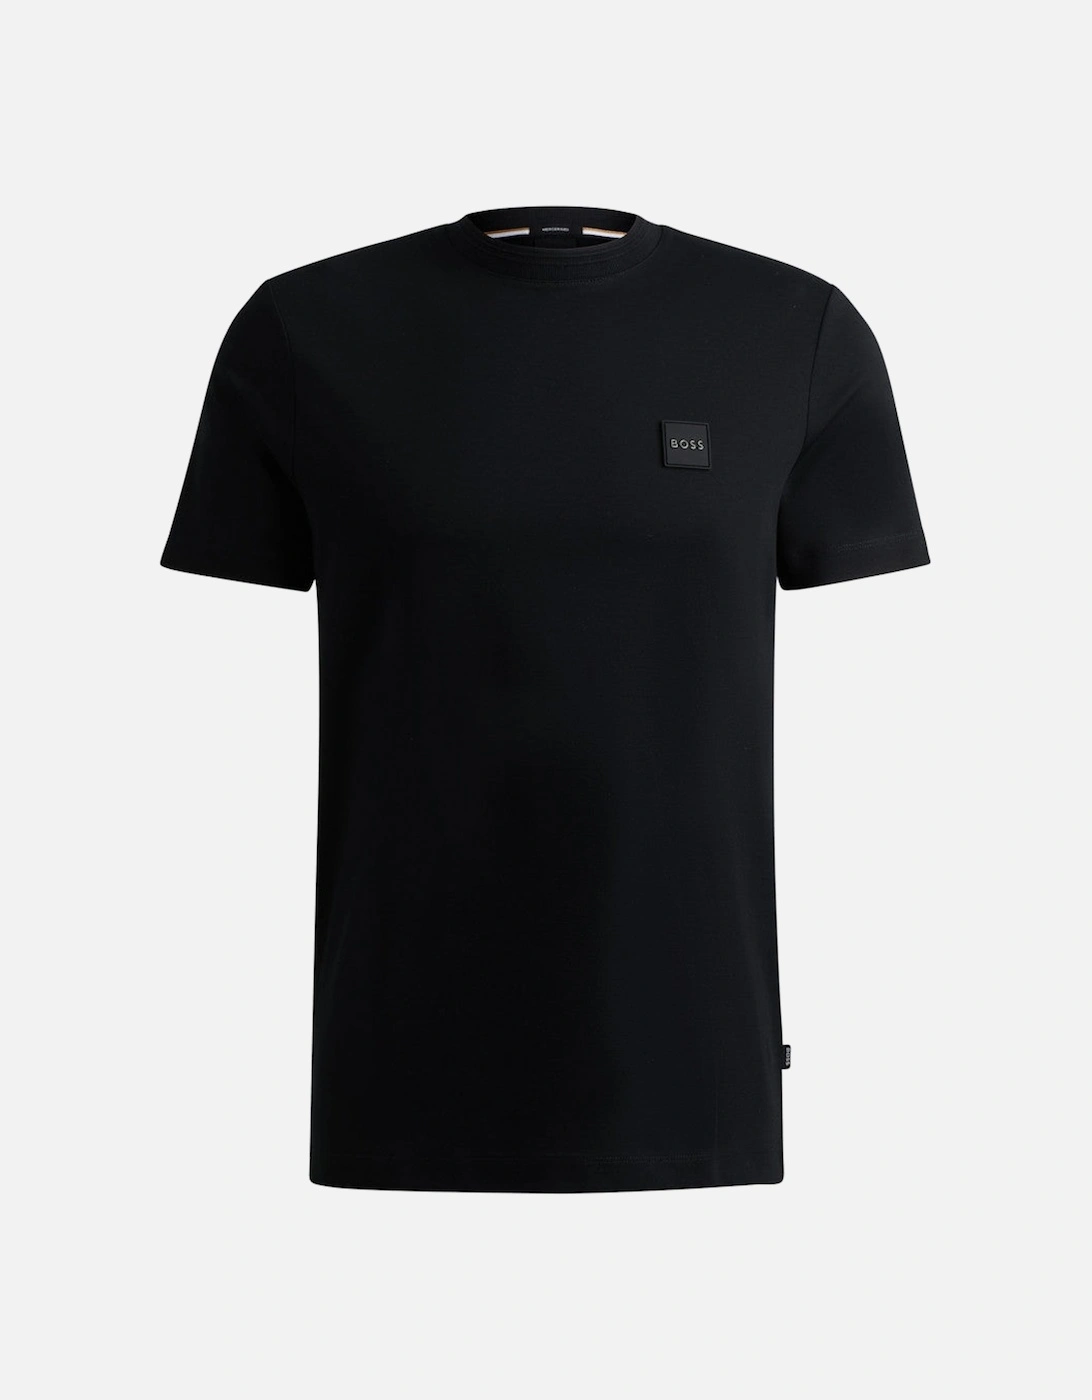 BOSS Black Tiburt 278 T-Shirt 10259994 002 Black, 5 of 4